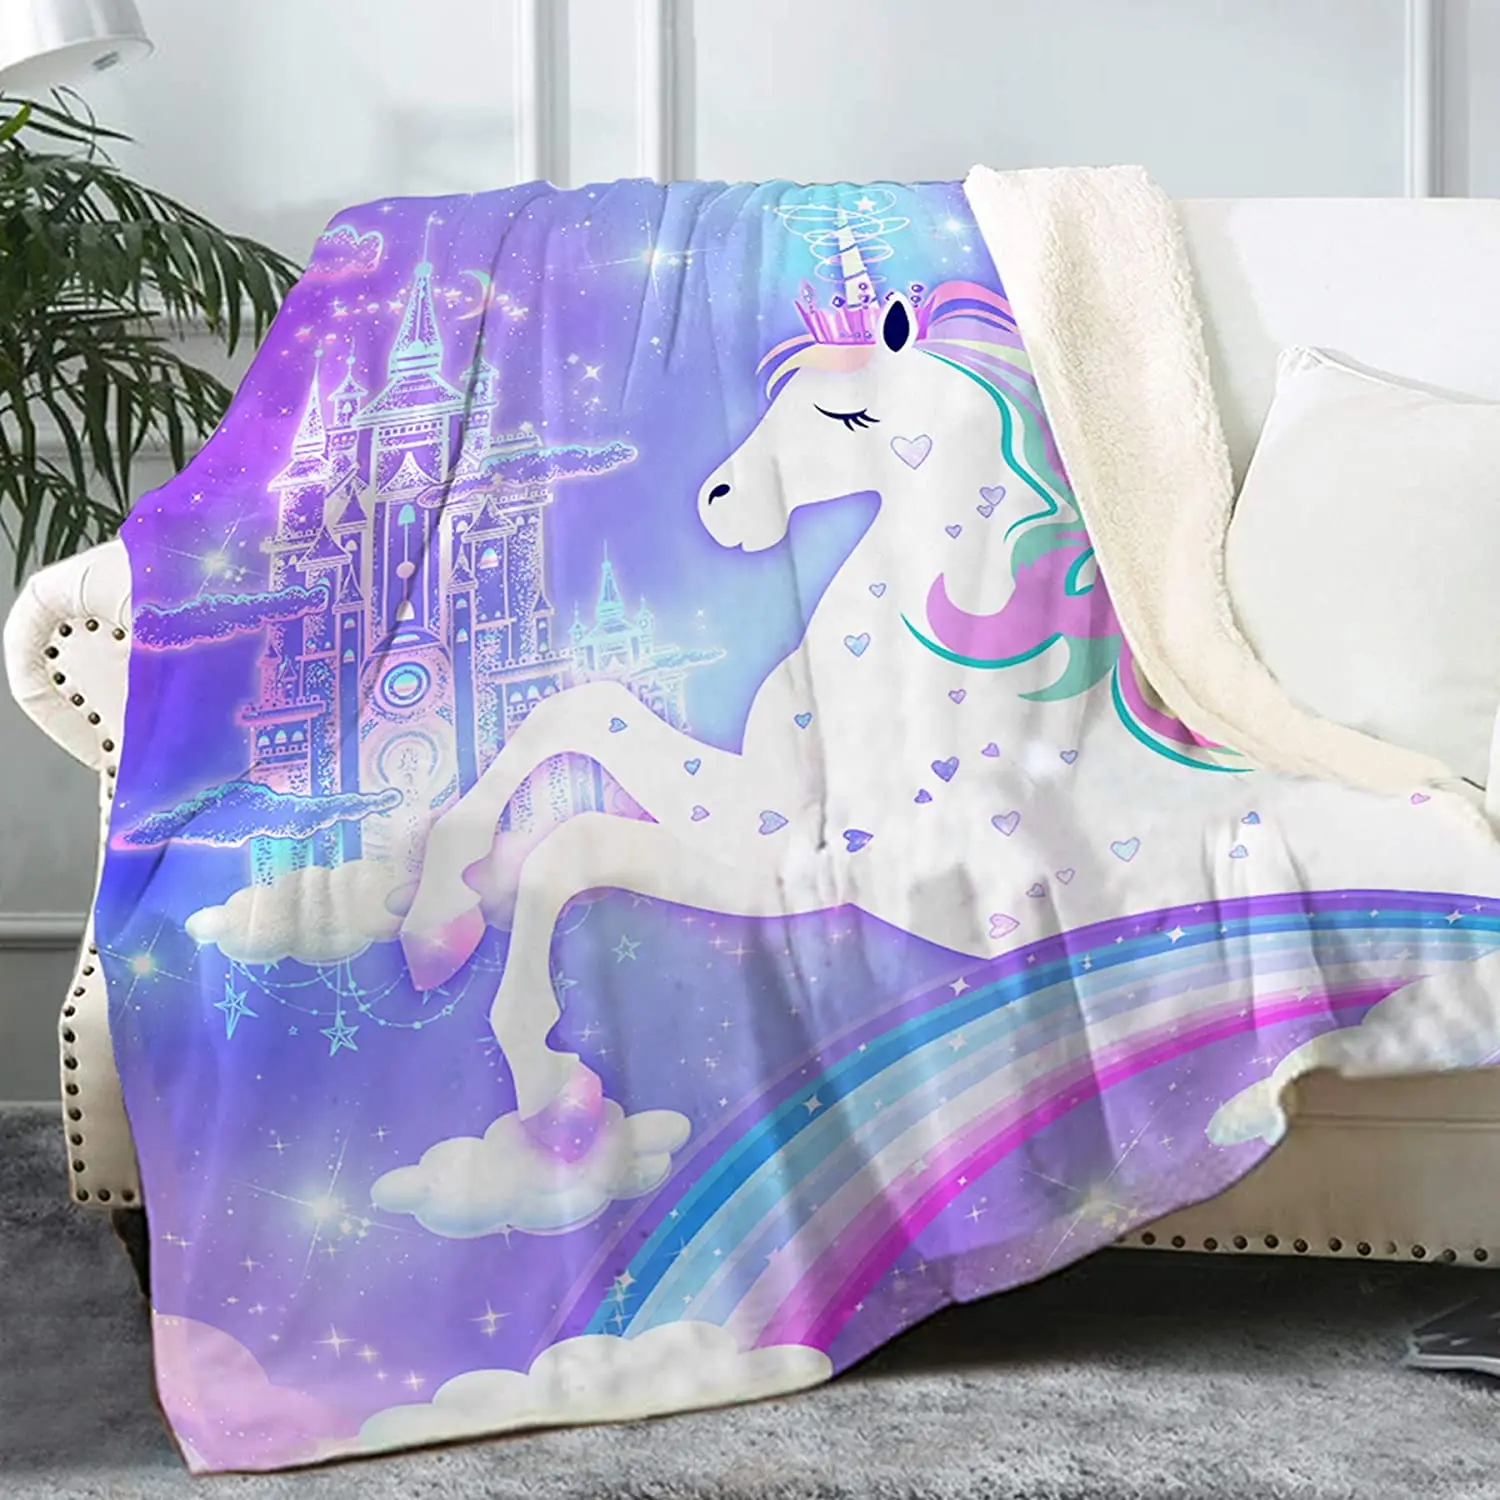 

Bonsai Tree Unicorn Blanket, Cute Rainbow Fuzzy Soft Cozy Warm Sherpa Throw Blanket for Kids Girls Women, Thick Magic Castle